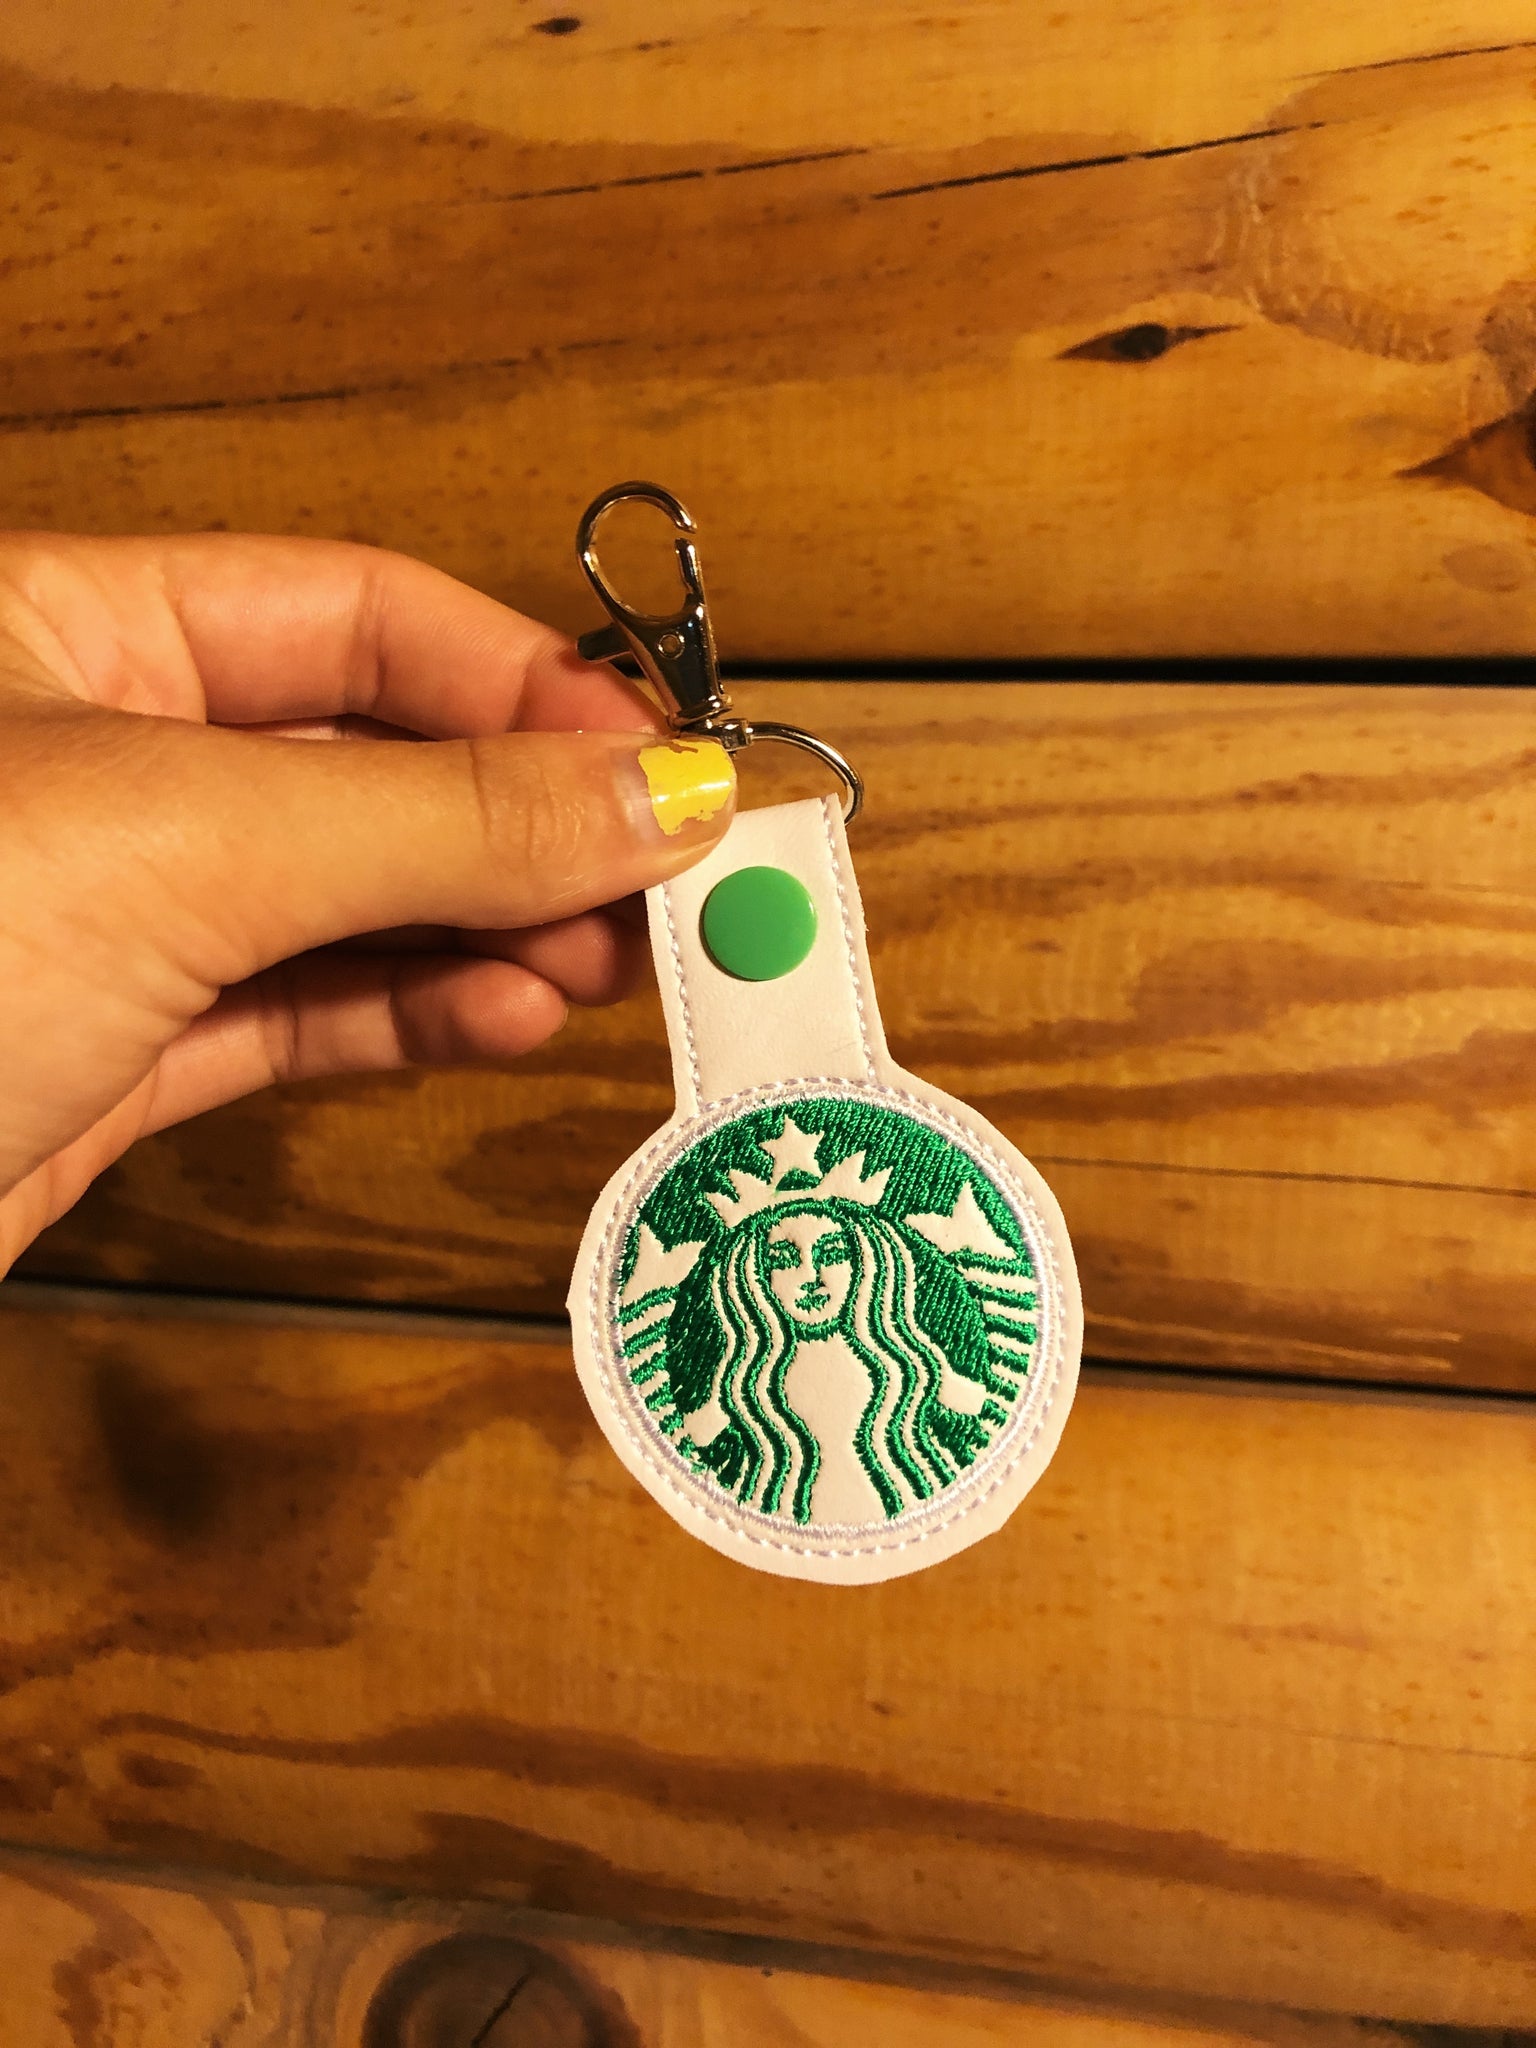 Starbucks Coffee Keychain